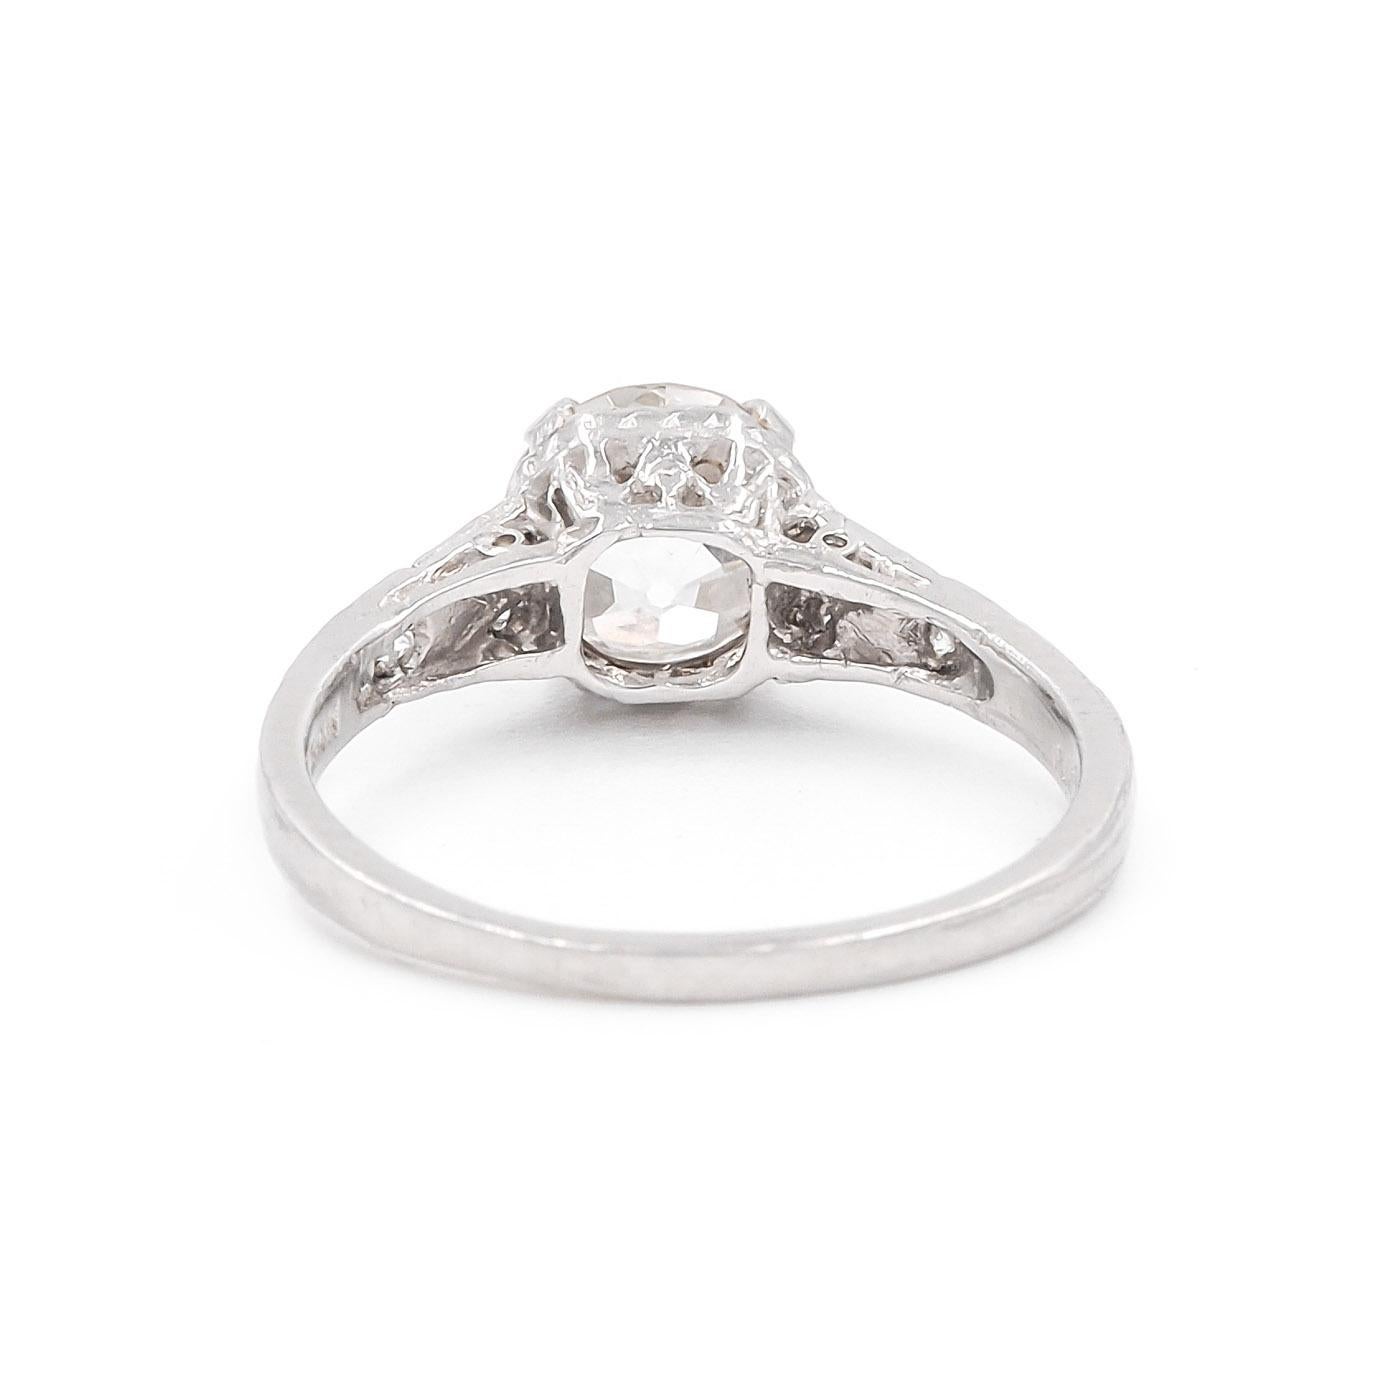 Women's Art Deco 1.21 Carat GIA Old European Cut Diamond Engagement Ring